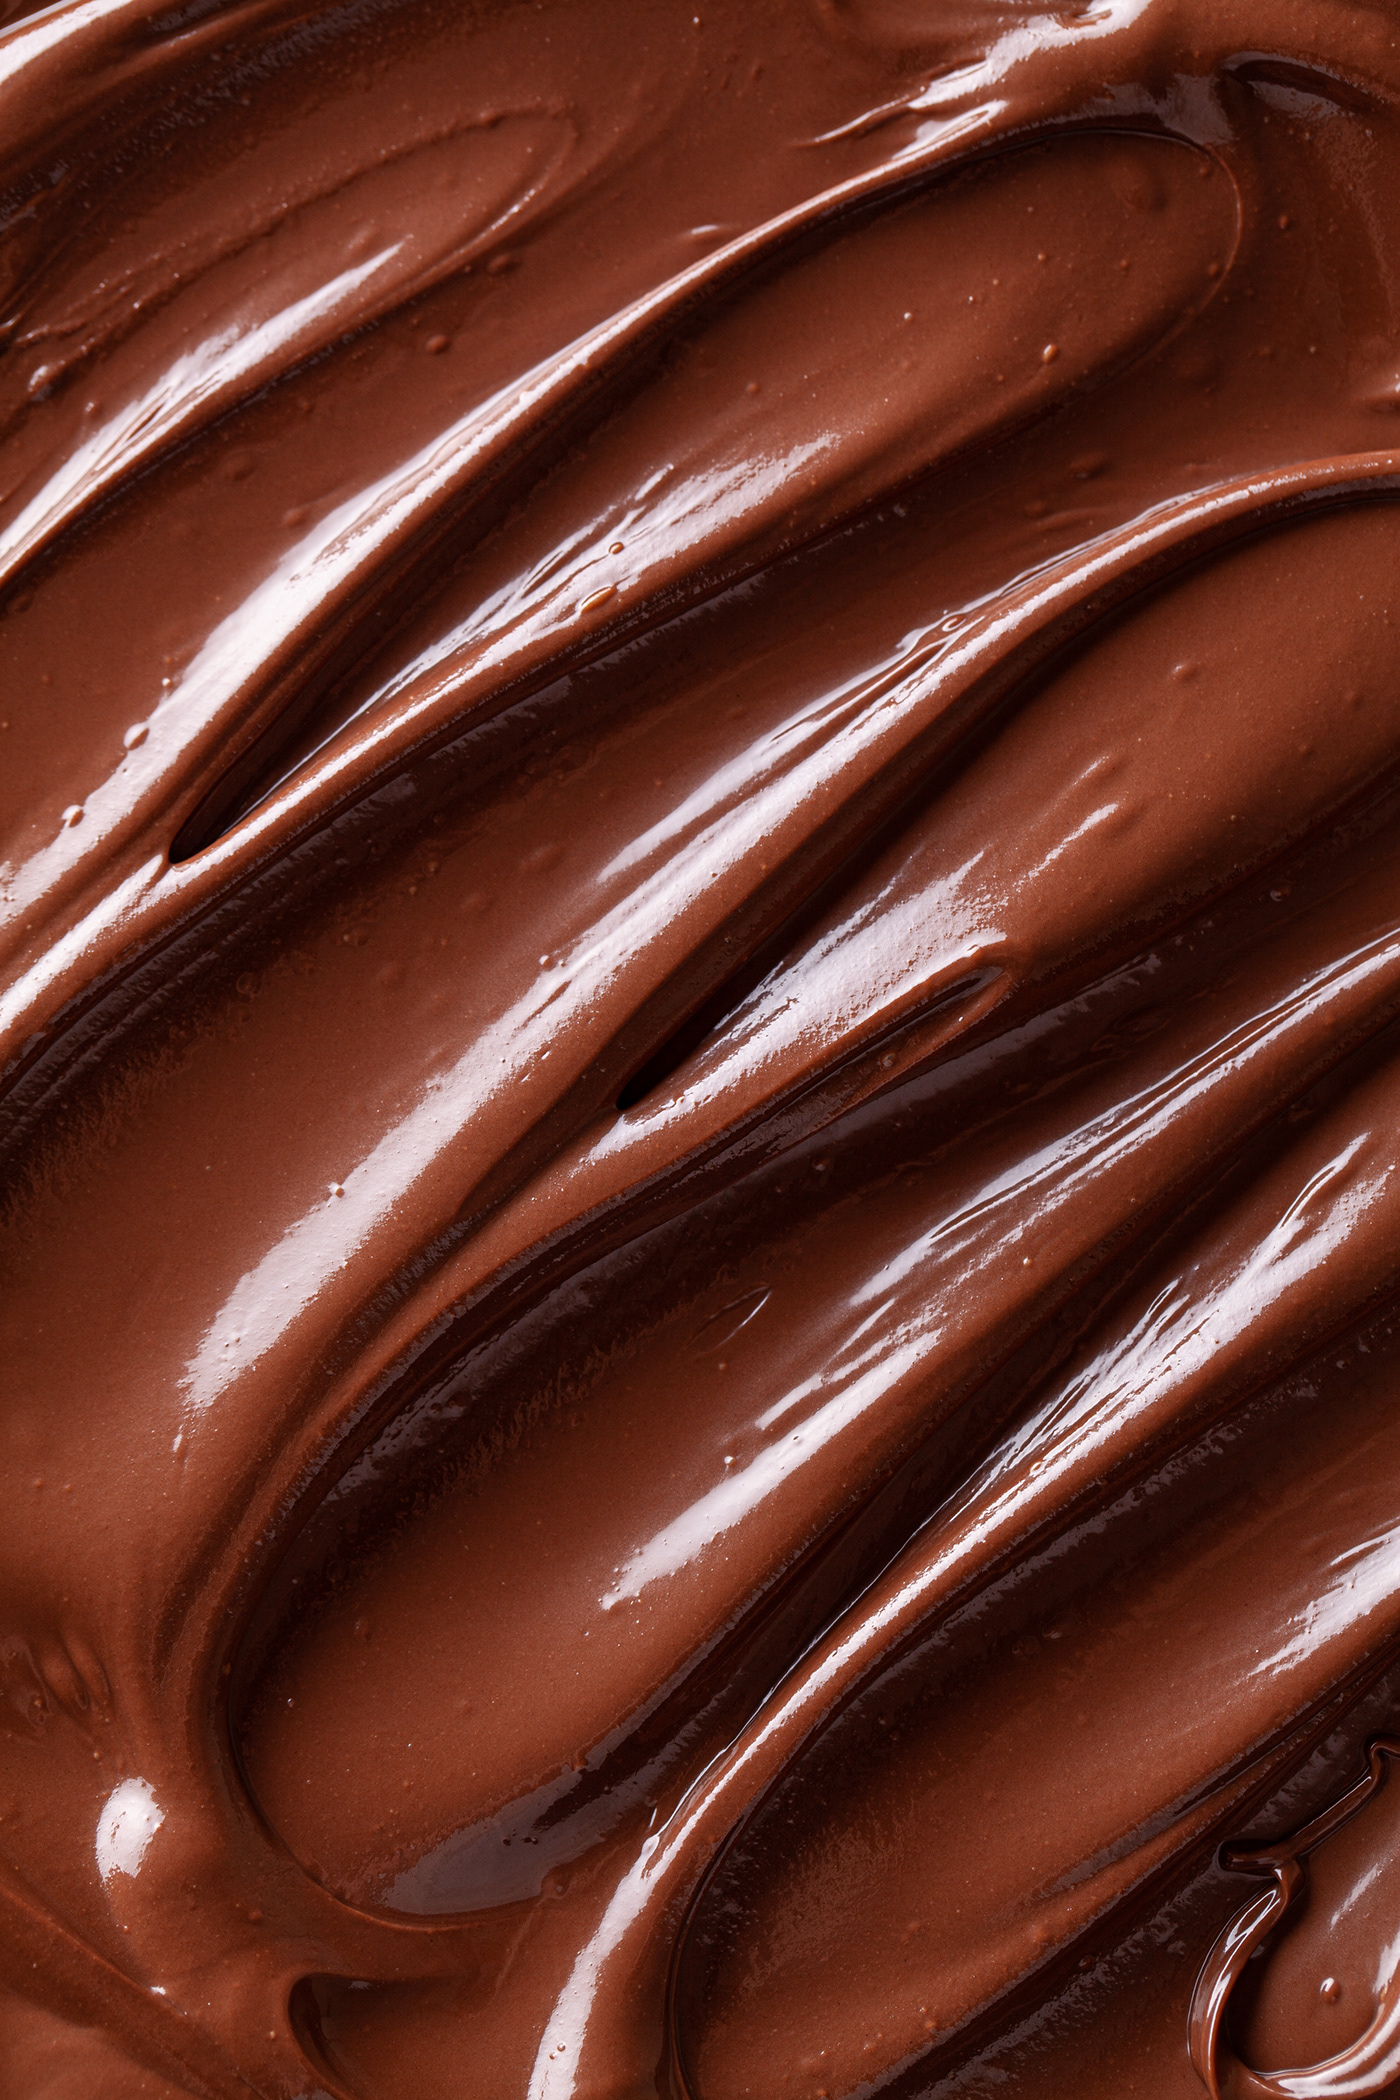 Chocolate texture